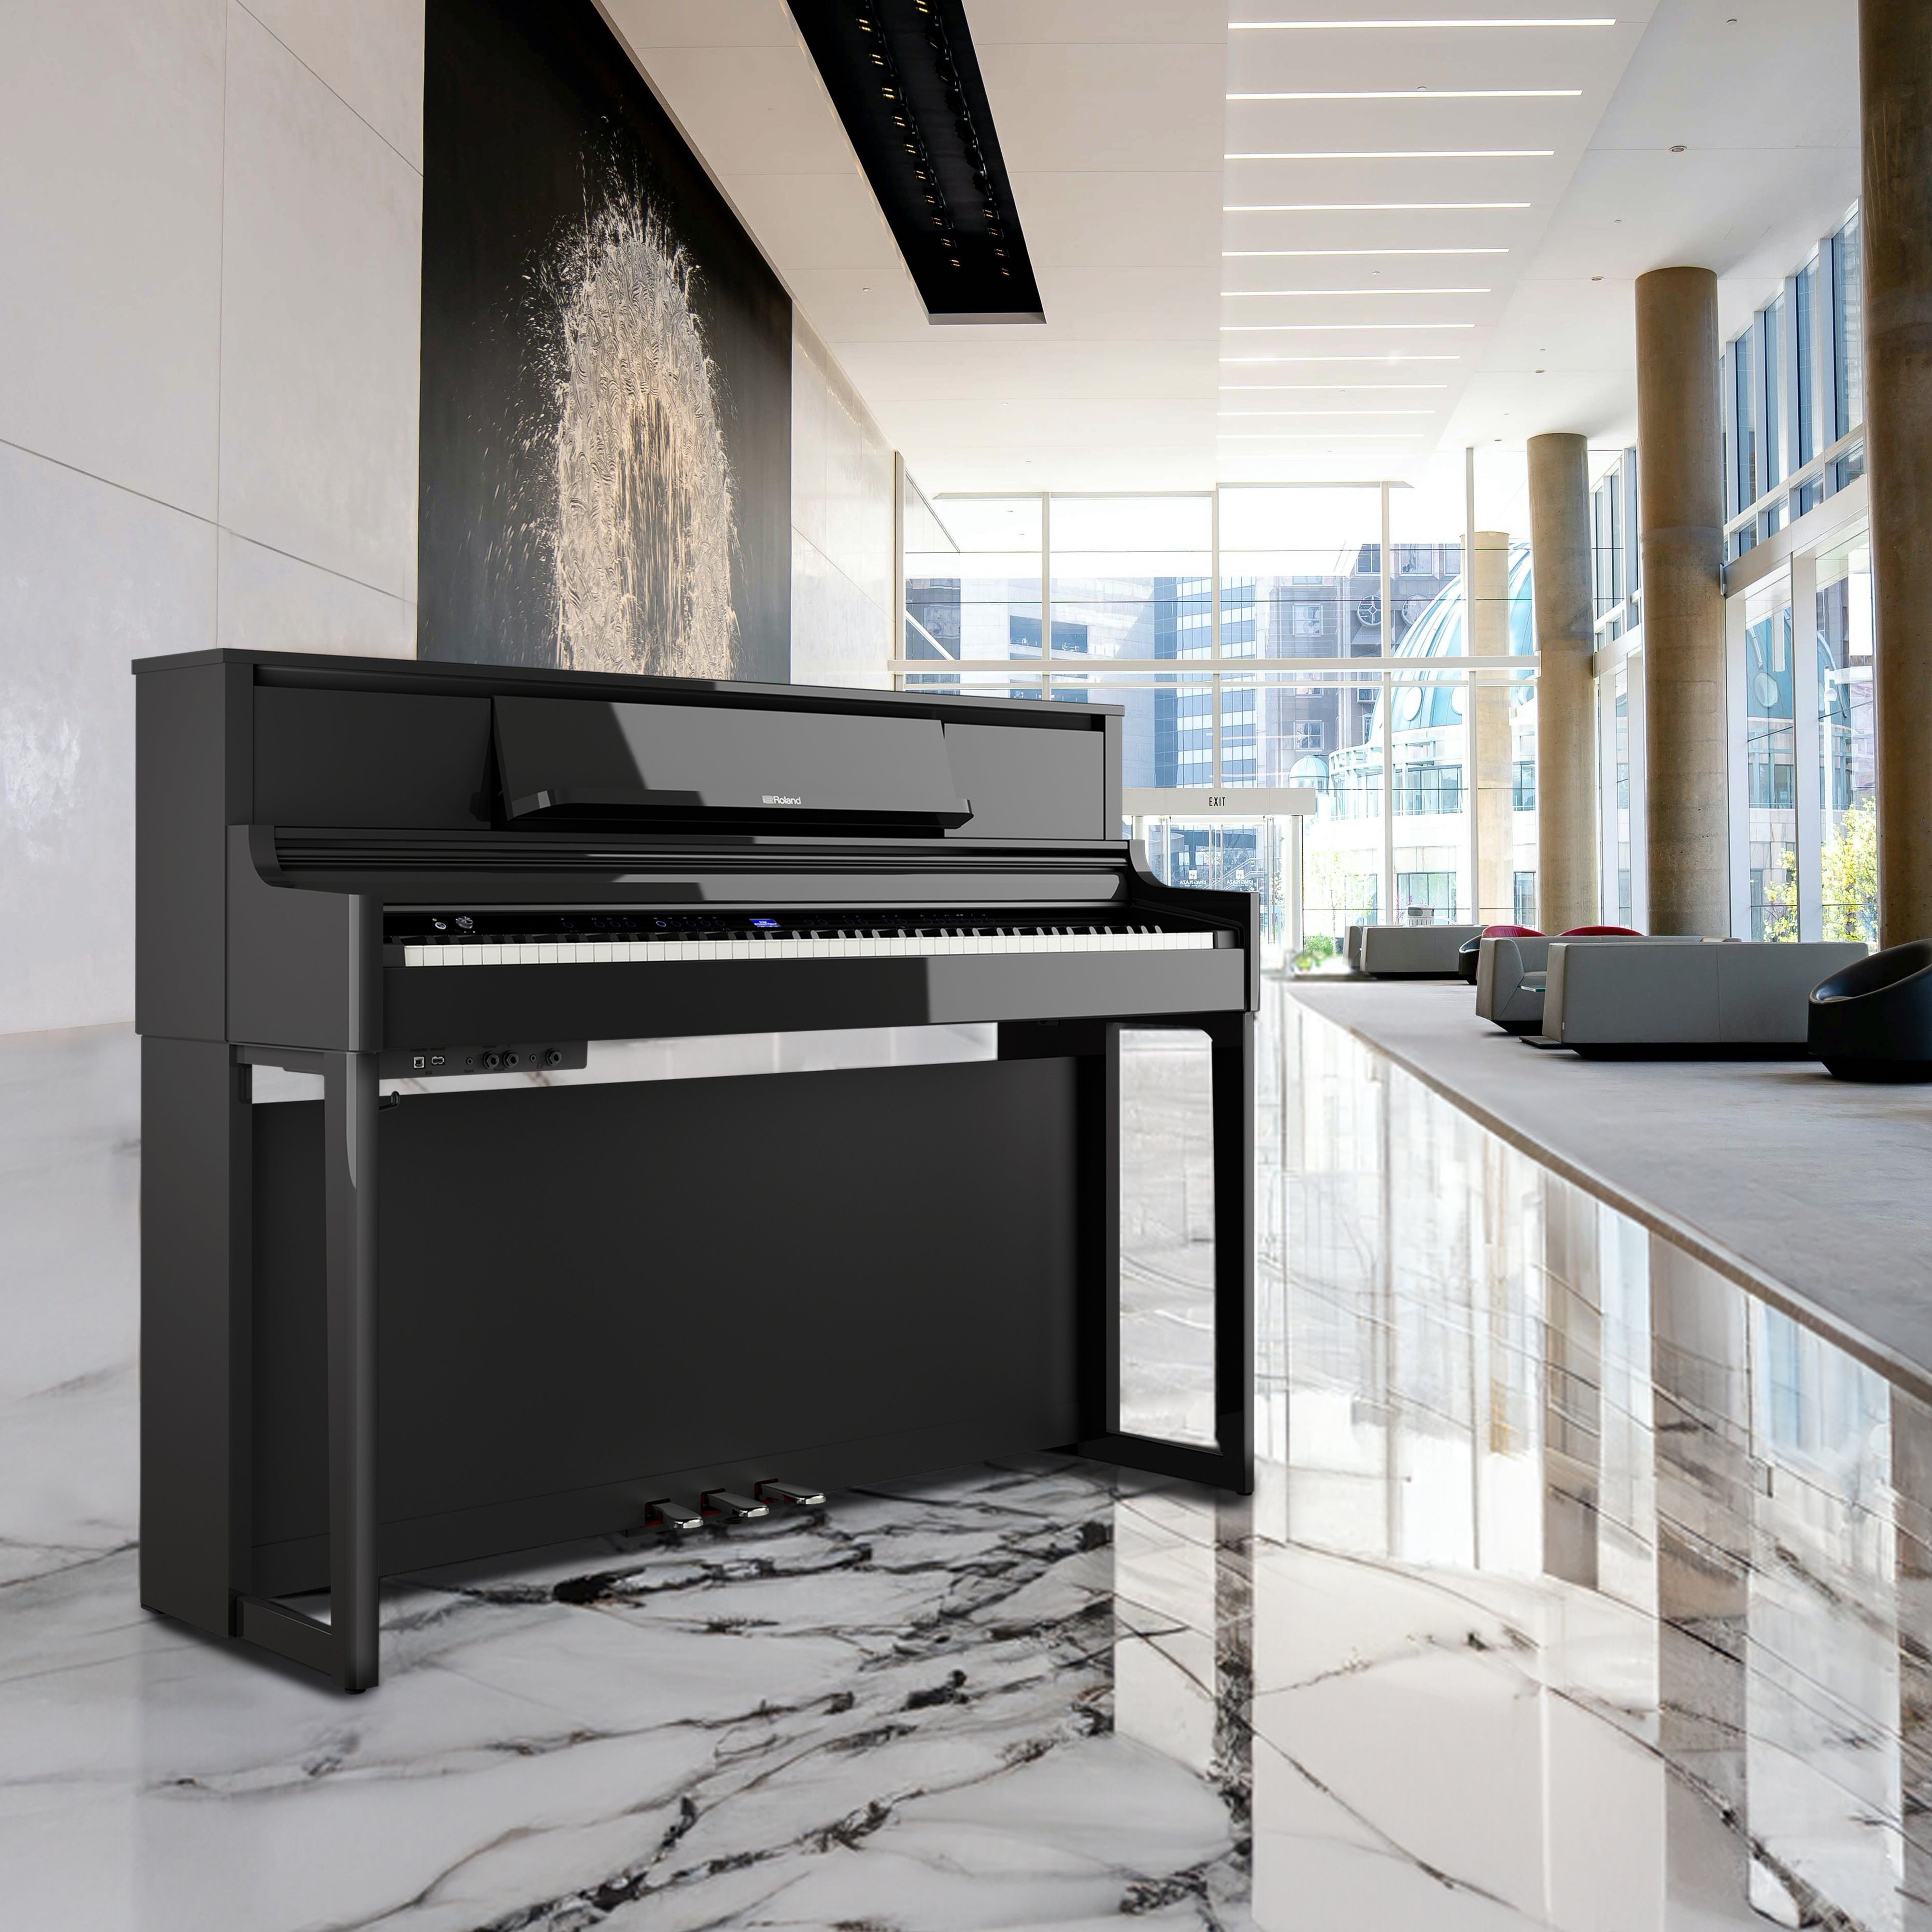 Roland LX-5 Digital Piano with Bench - Polished Ebony - in a fancy hotel lobby